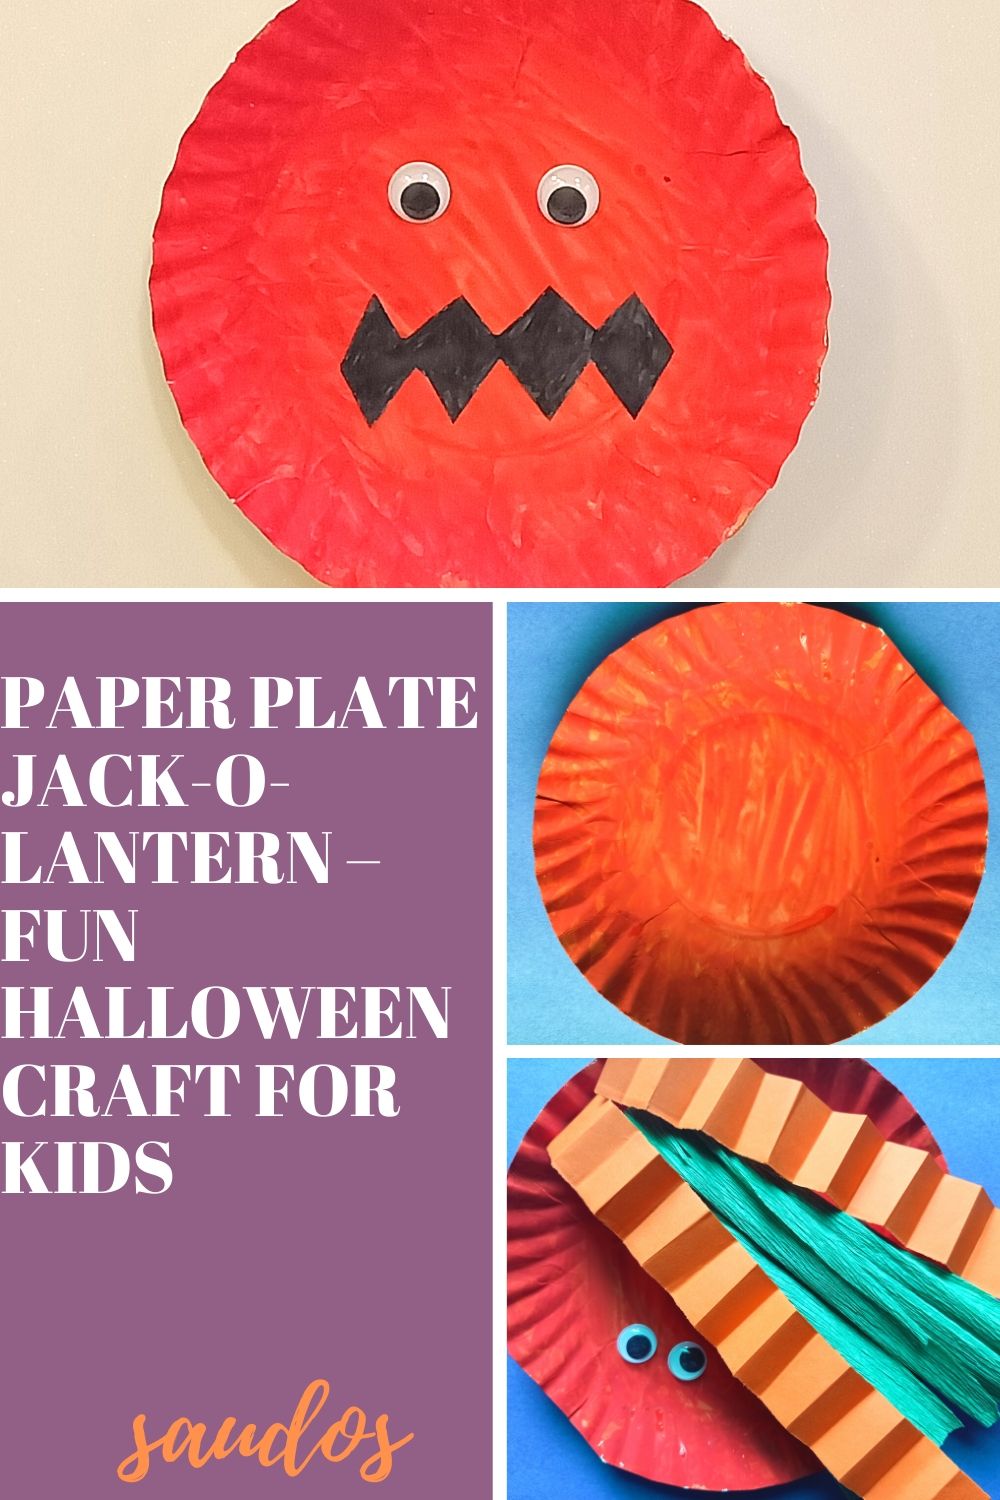 Paper Plate Jack-O-Lantern – Fun Halloween Craft for Kids